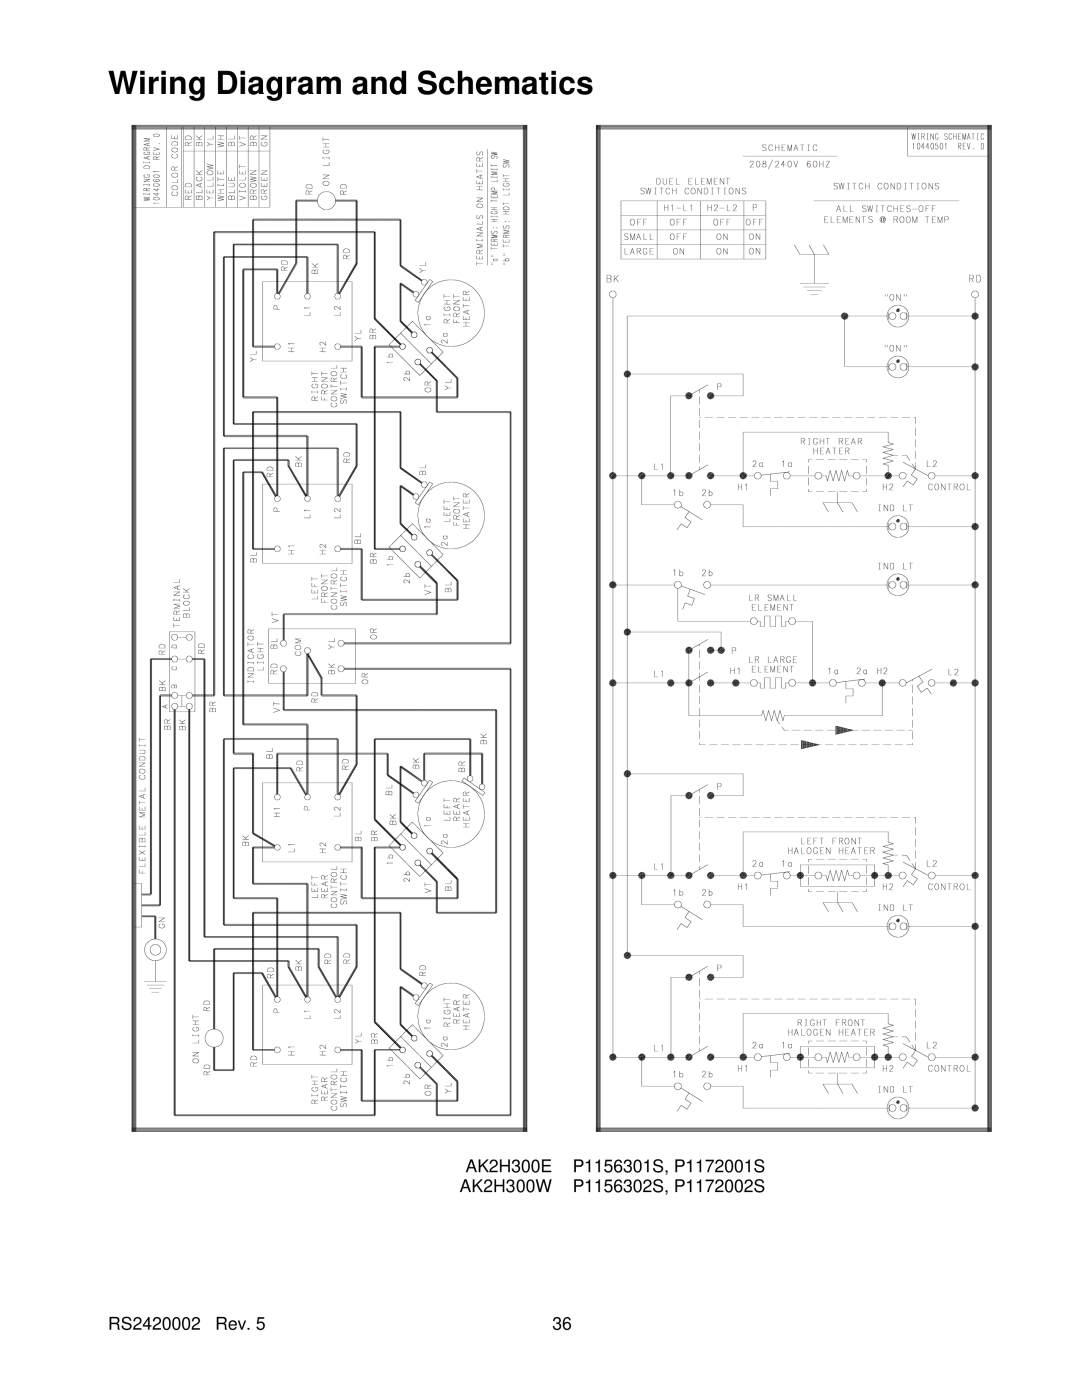 Amana AK2T30/36E1/W1 Wiring Diagram and Schematics, AK2H300E, P1156301S, P1172001S, AK2H300W, P1156302S, P1172002S 